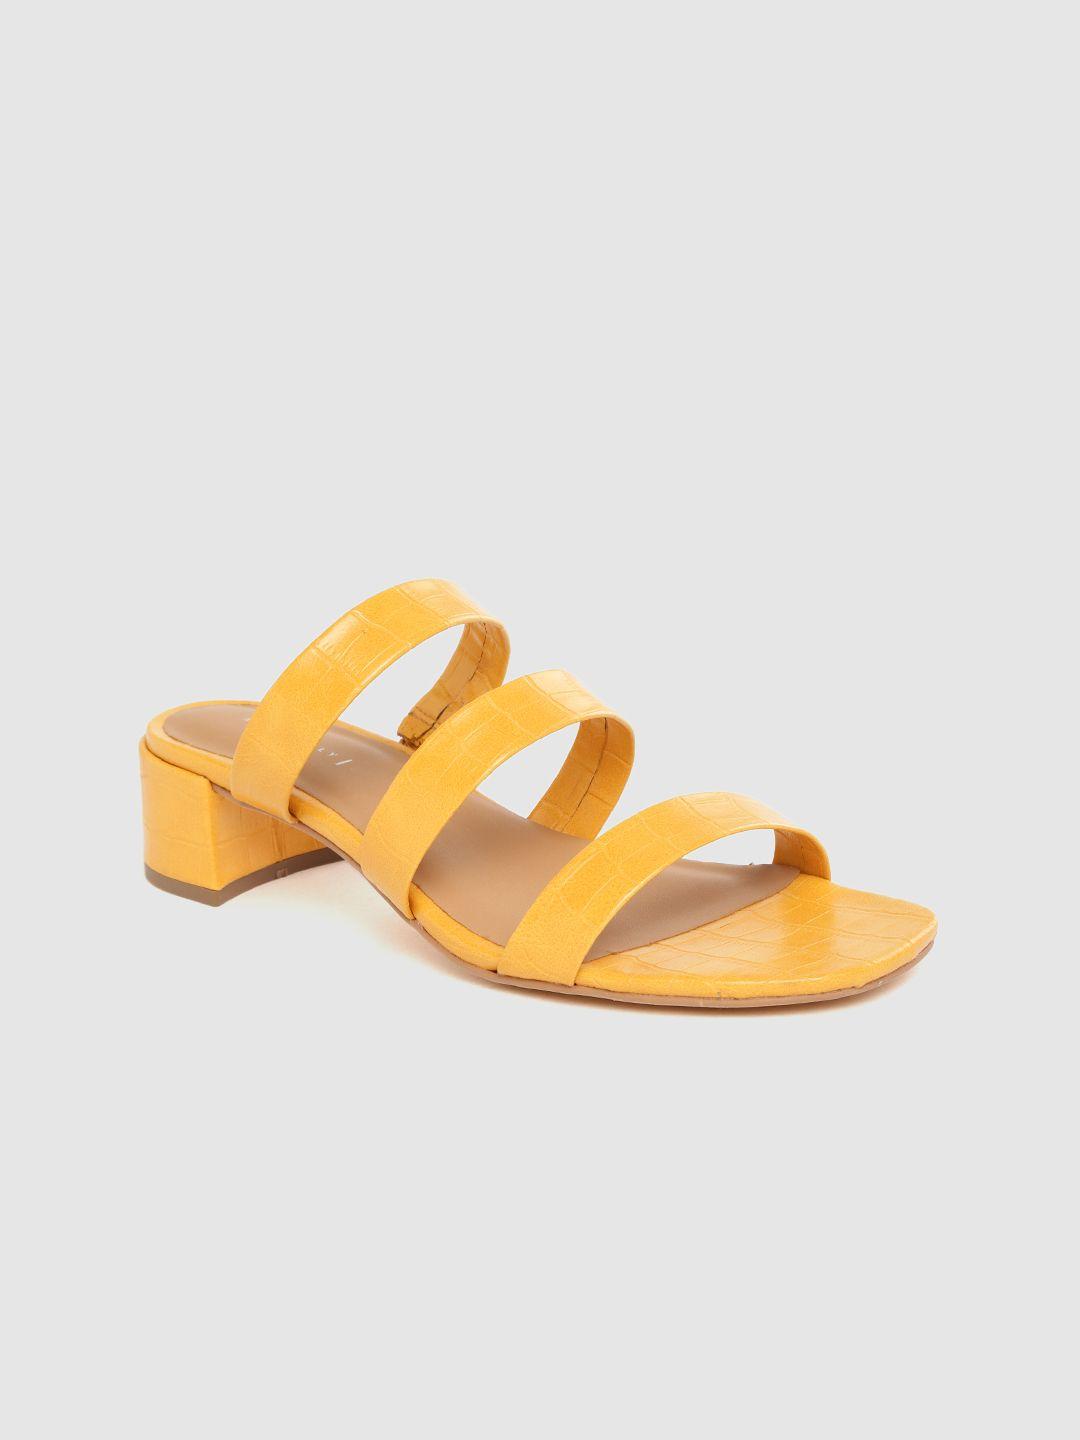 allen solly women mustard yellow croc-textured heeled mules